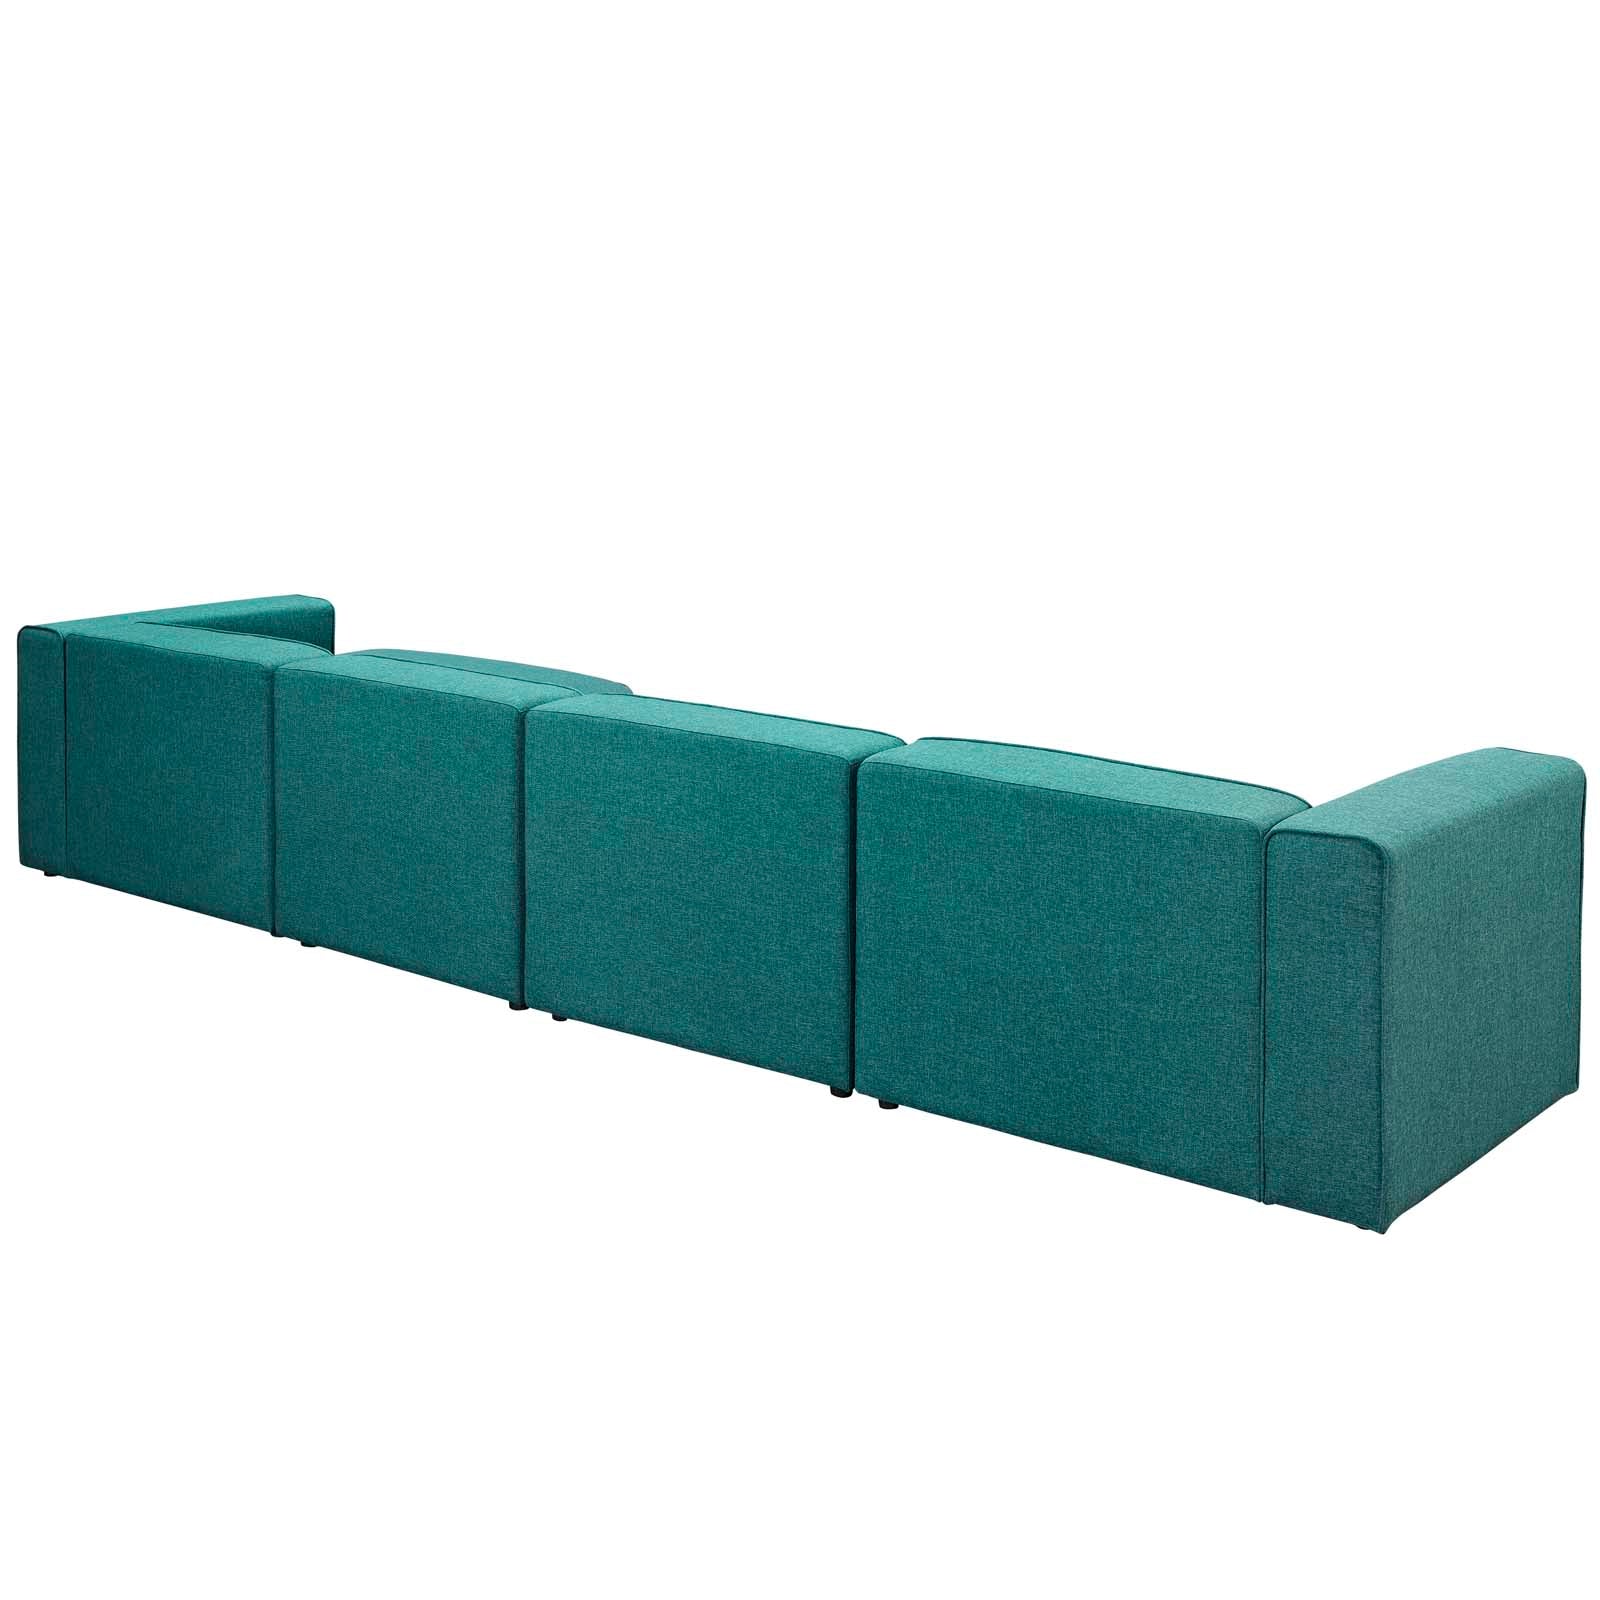 Mingle 5 Piece Upholstered Fabric Sectional Sofa Set - East Shore Modern Home Furnishings